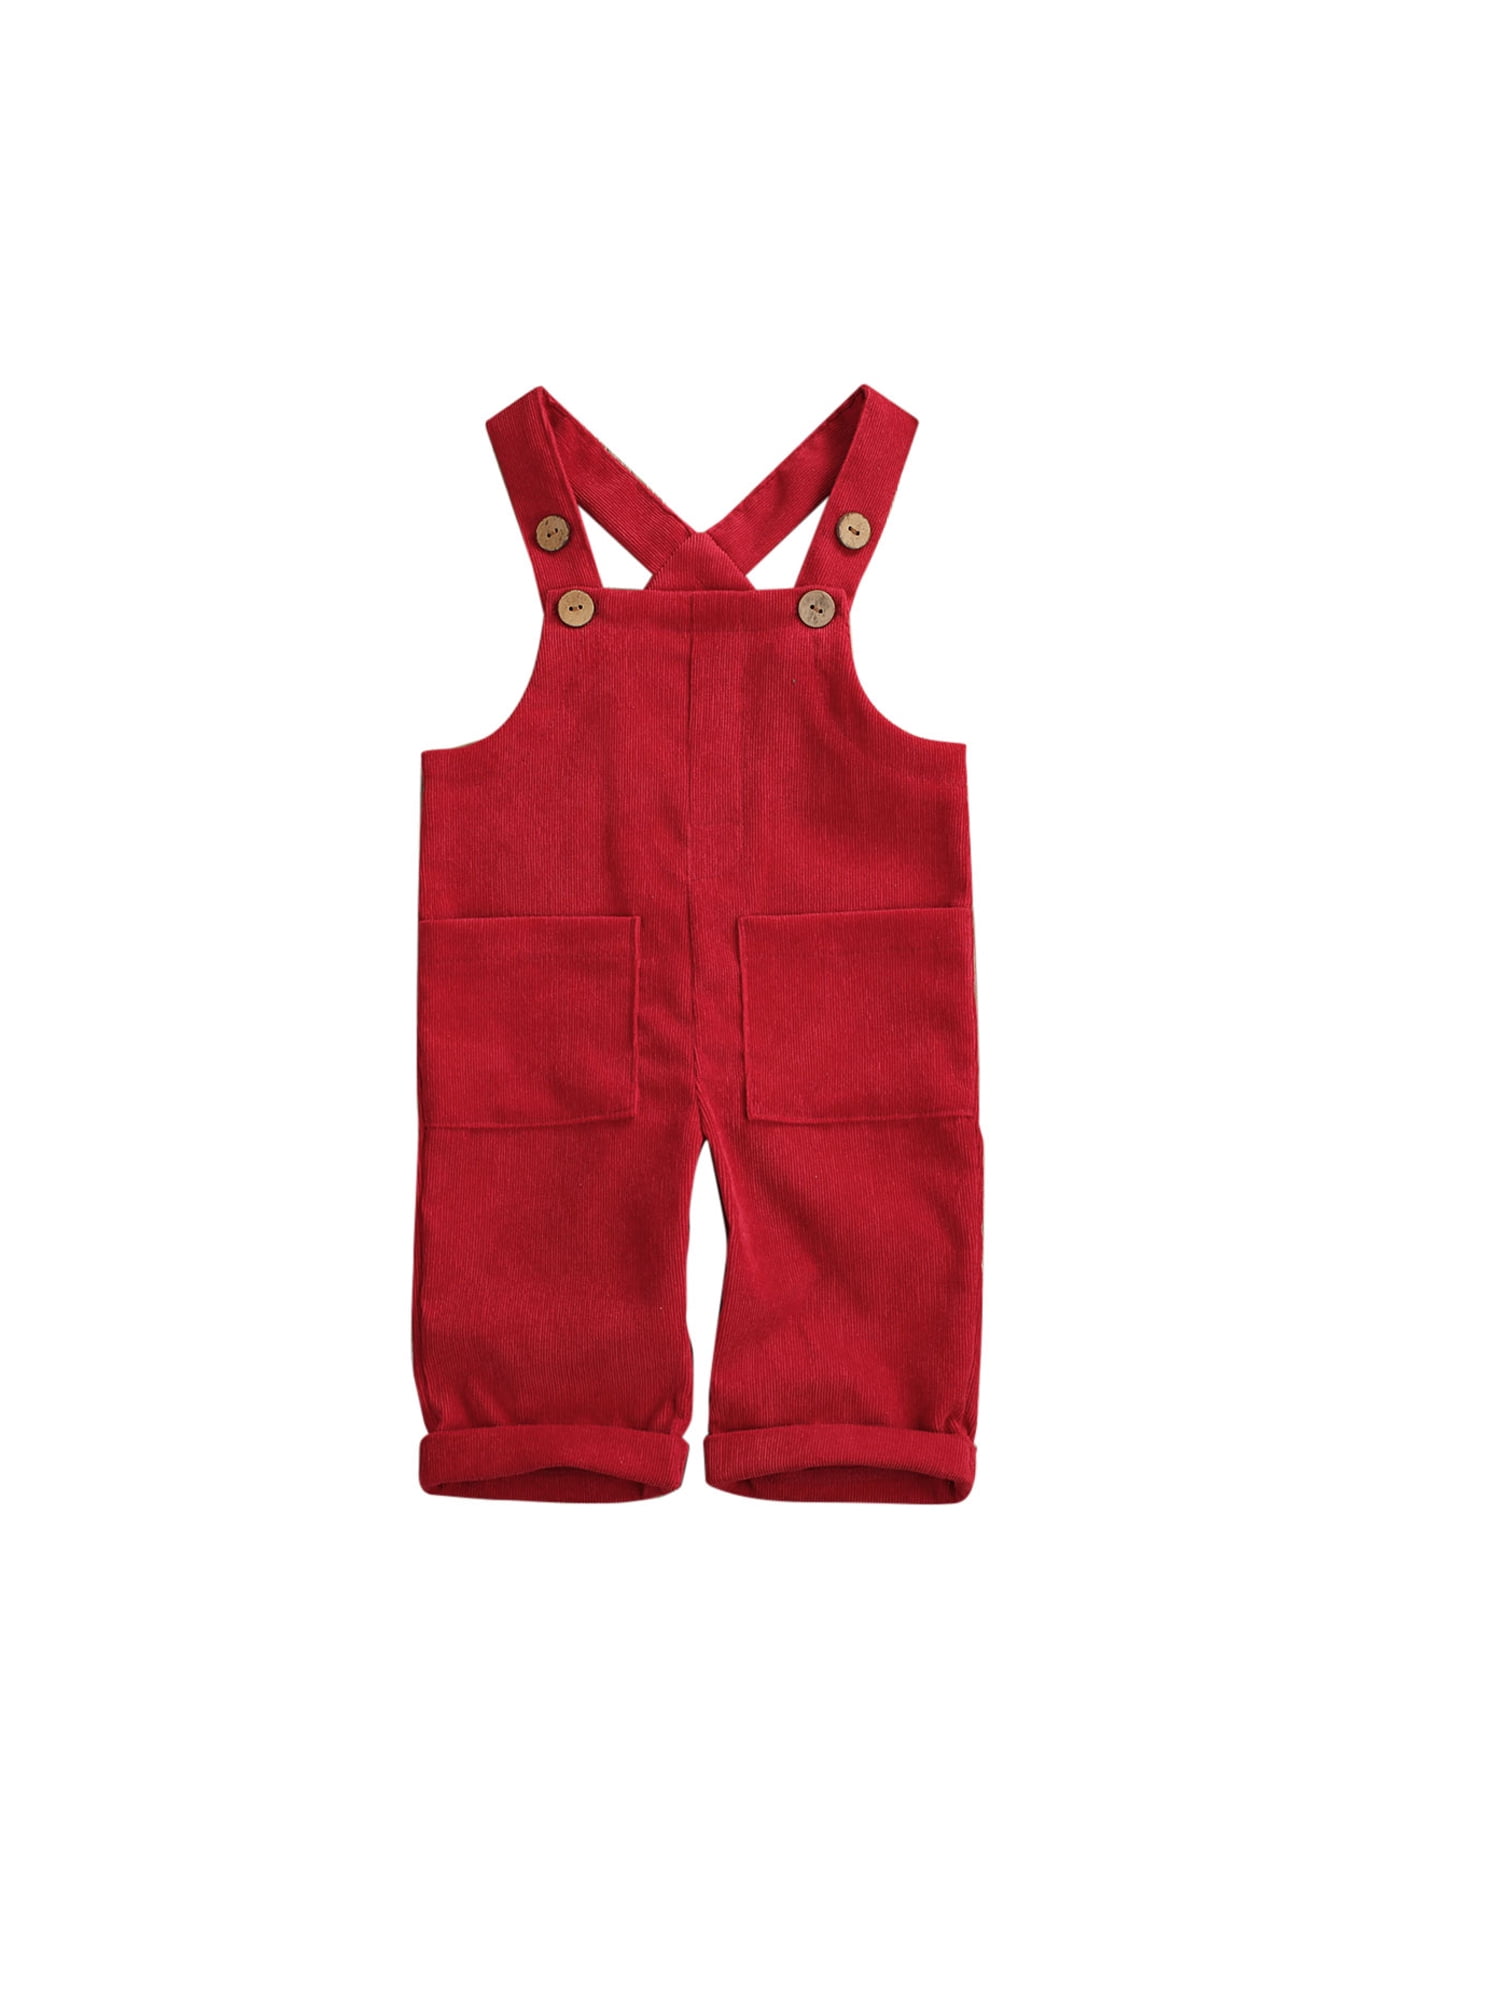 Jxzom Toddler Unisex Baby Overall Boys/Girls Denim Suspender Pants Sleeveless Romper Shorts Camouflage Printed Jumpsuit 